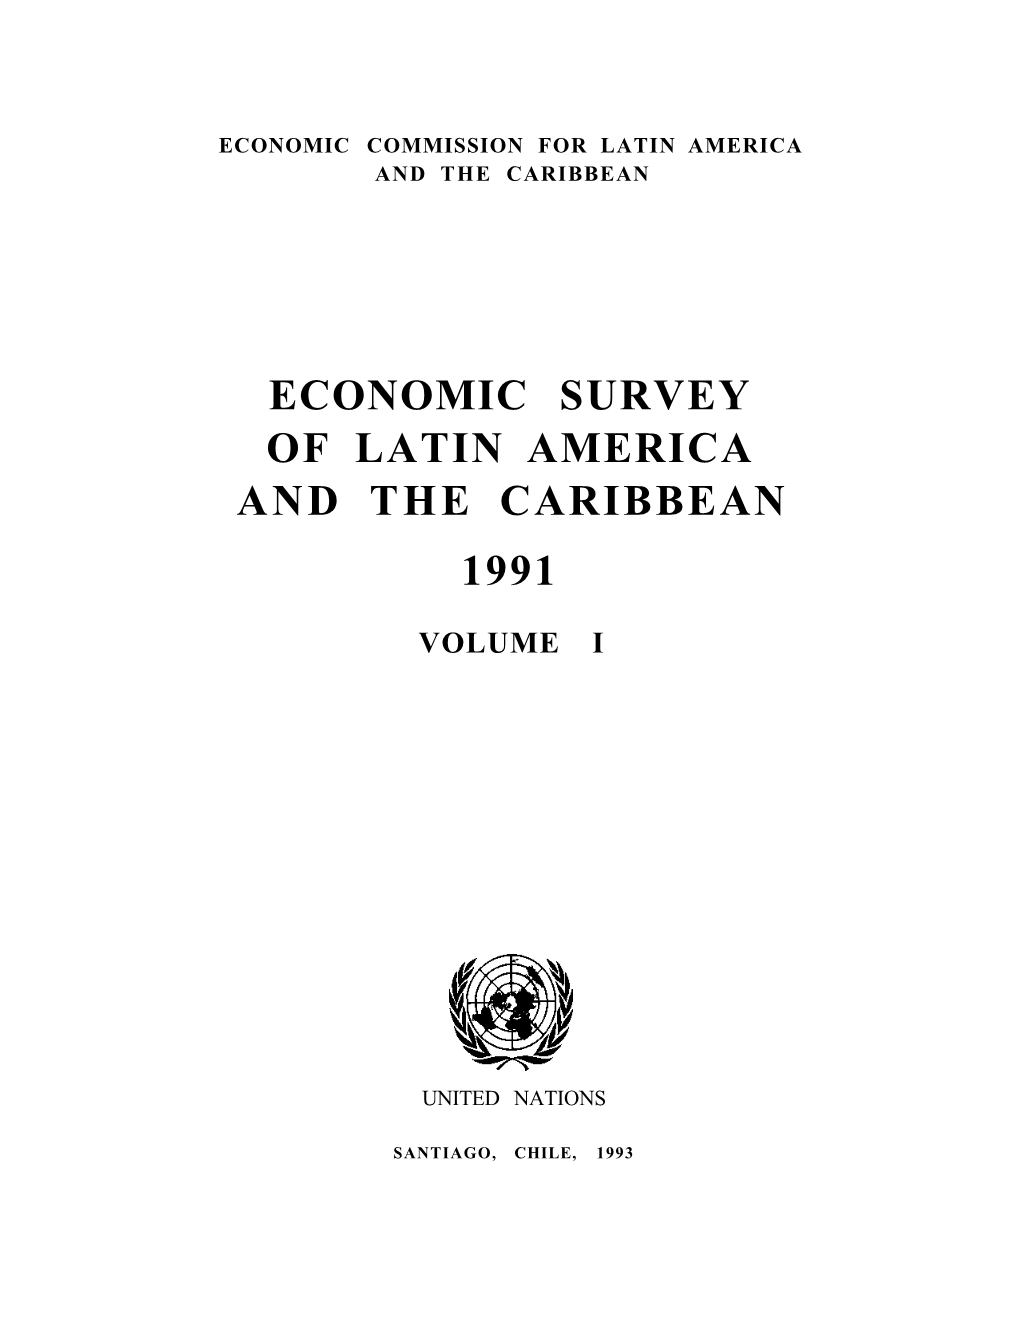 Economic Survey of Latin America and the Caribbean 1991